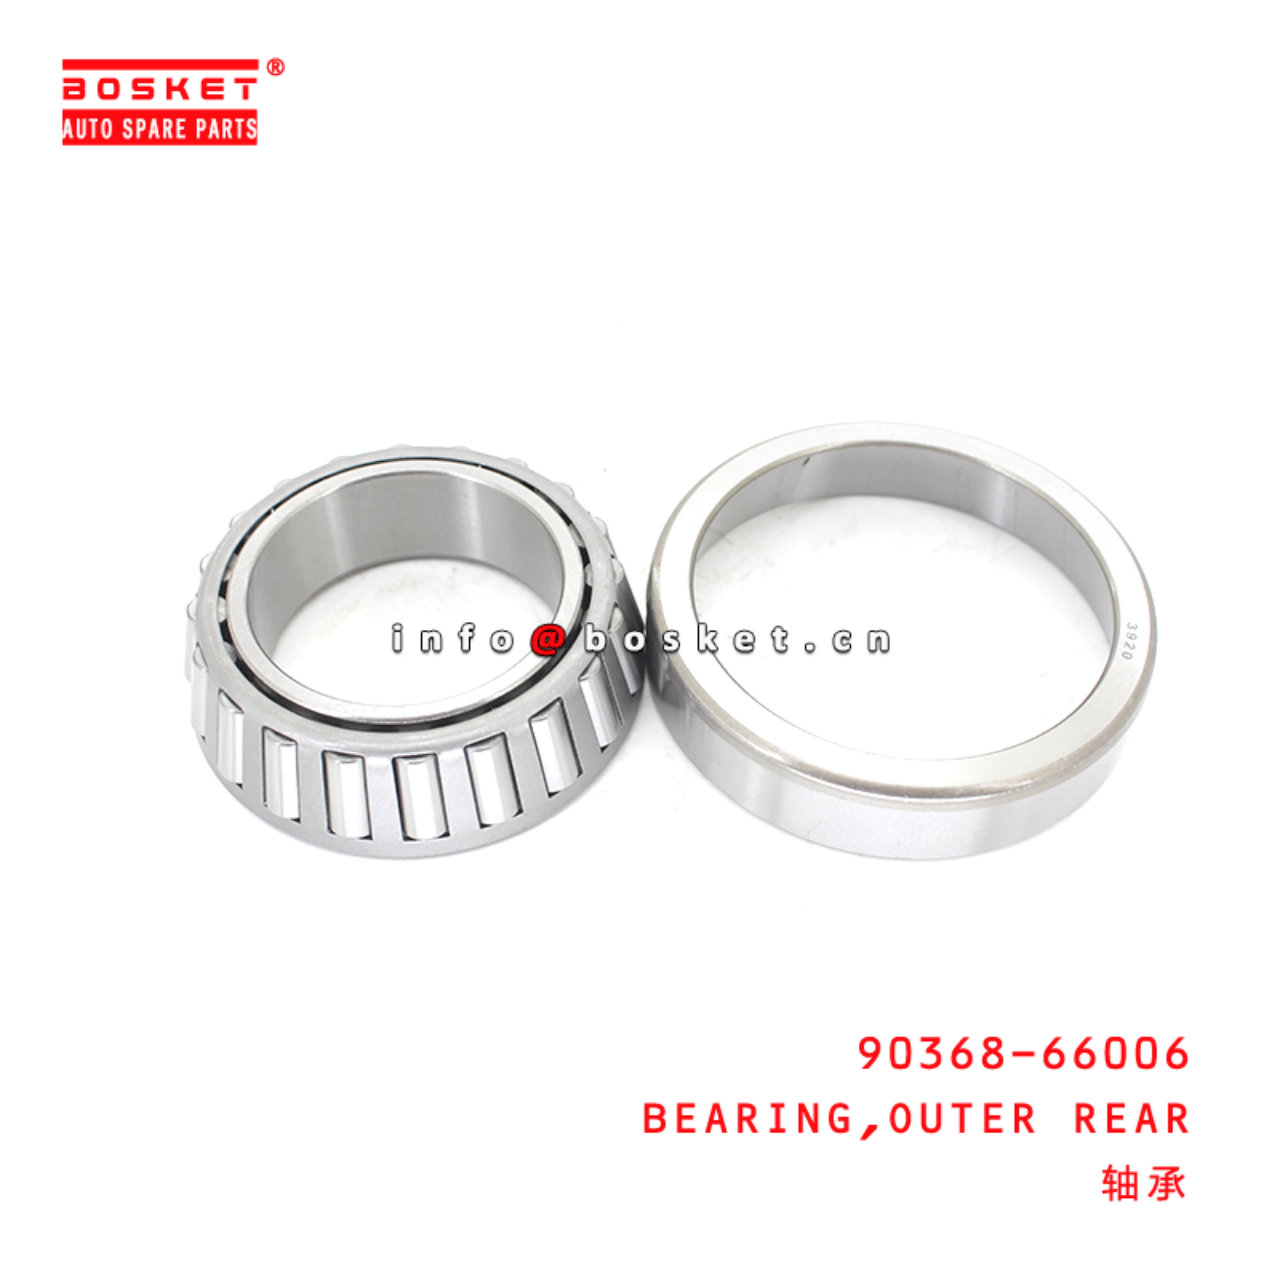 90368-66006 Rear Inner Bearing Suitable for ISUZU HINO700